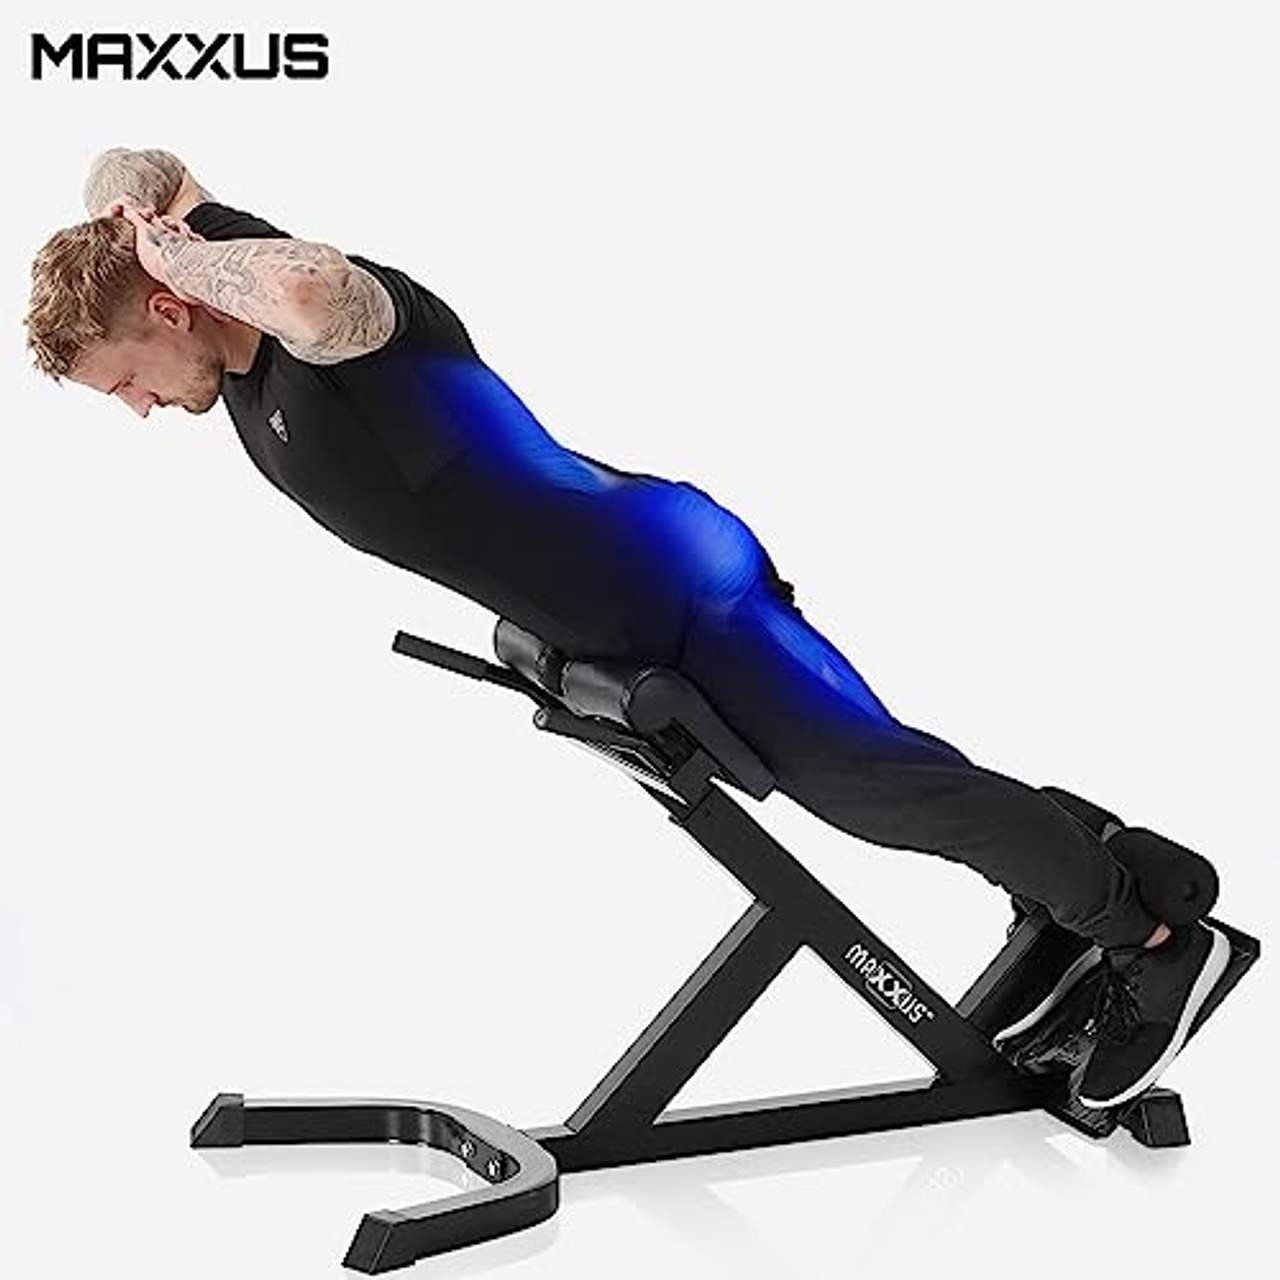 Maxxus Hyperextension Rückentrainer